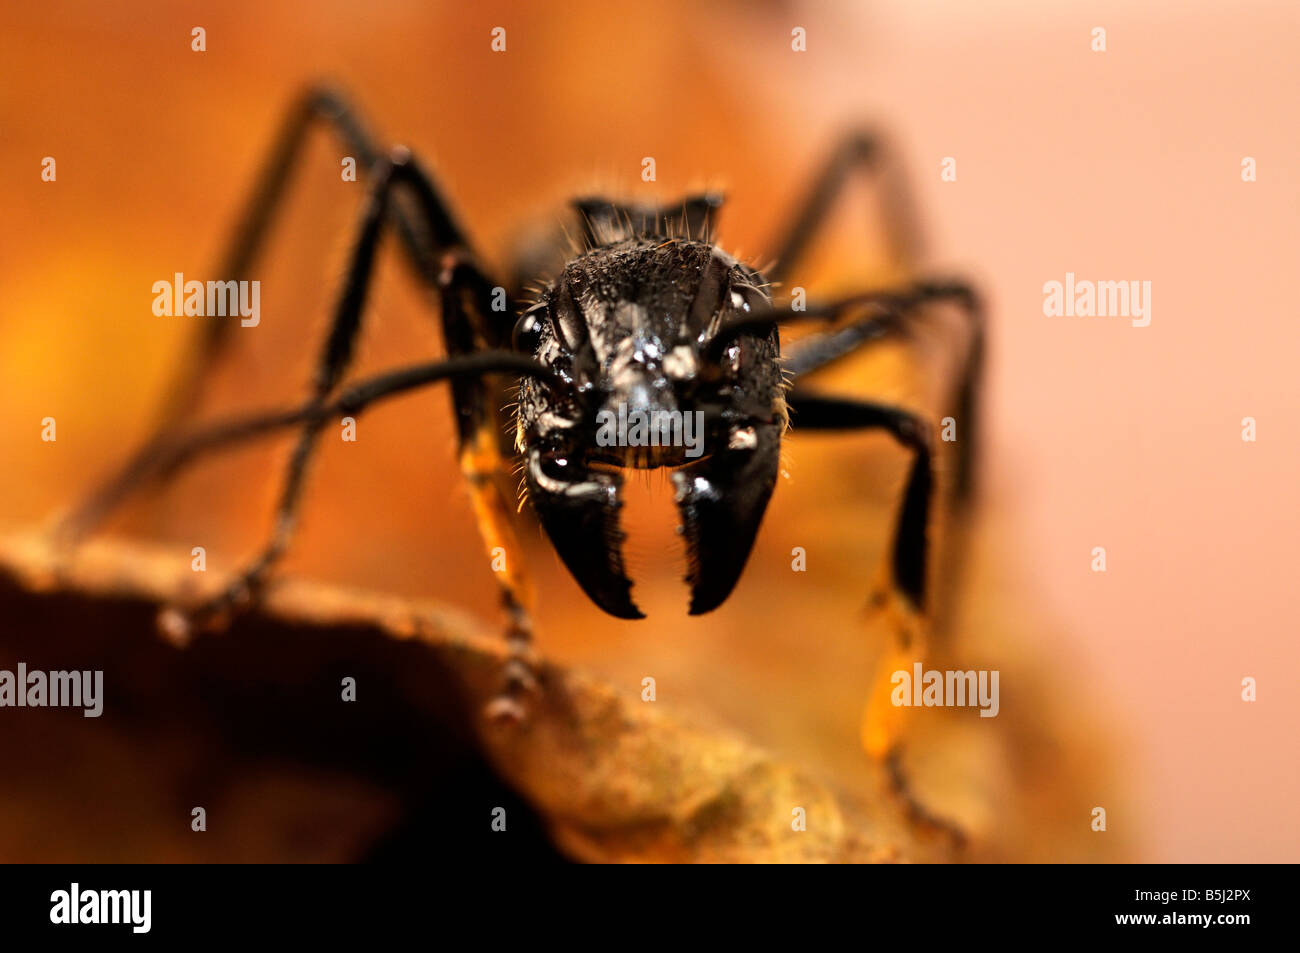 Isula or Bullet Ant Paraponera clavata ant Stock Photo